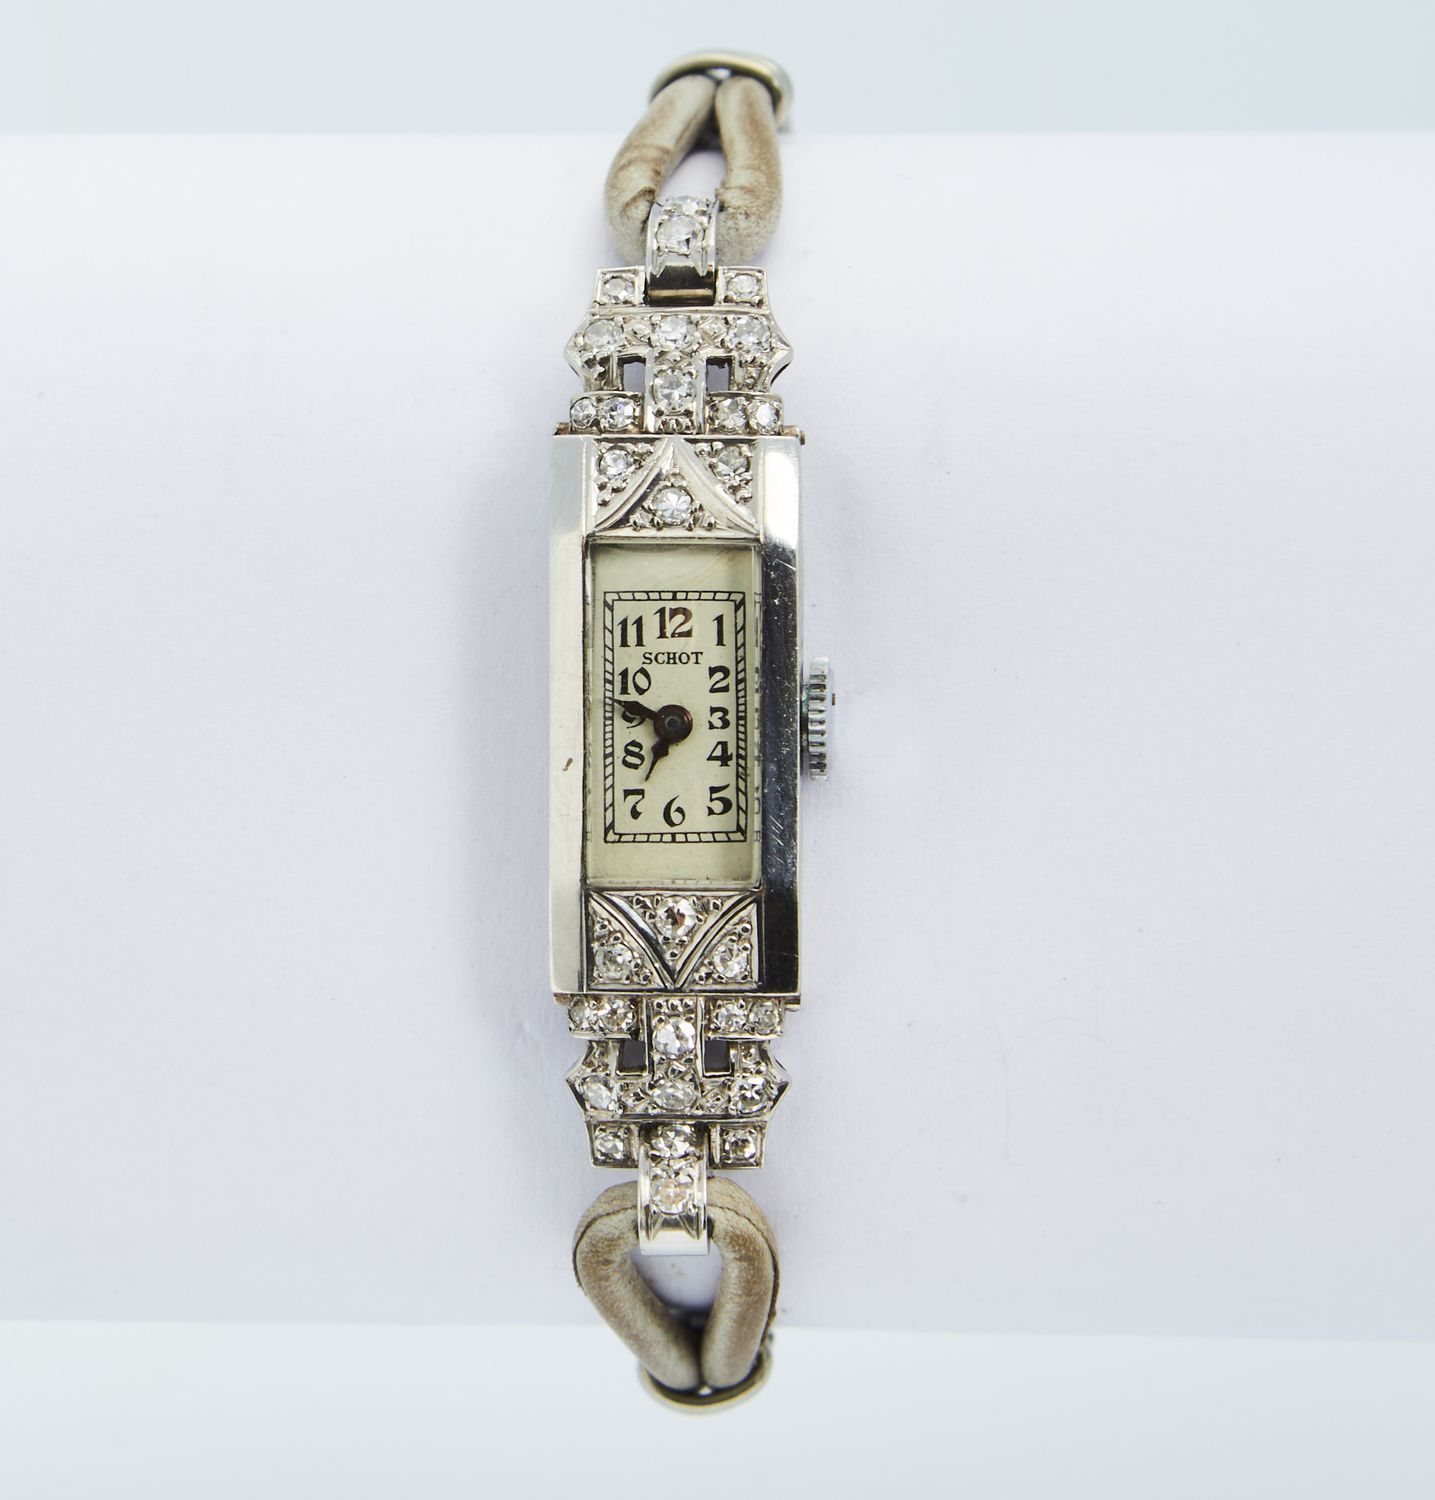 Null 165块ART DECO手表，铂金上镶嵌8/8钻石。瑞士长条形机芯，绳索和金属链接手镯。腕部16厘米，毛重12.6克